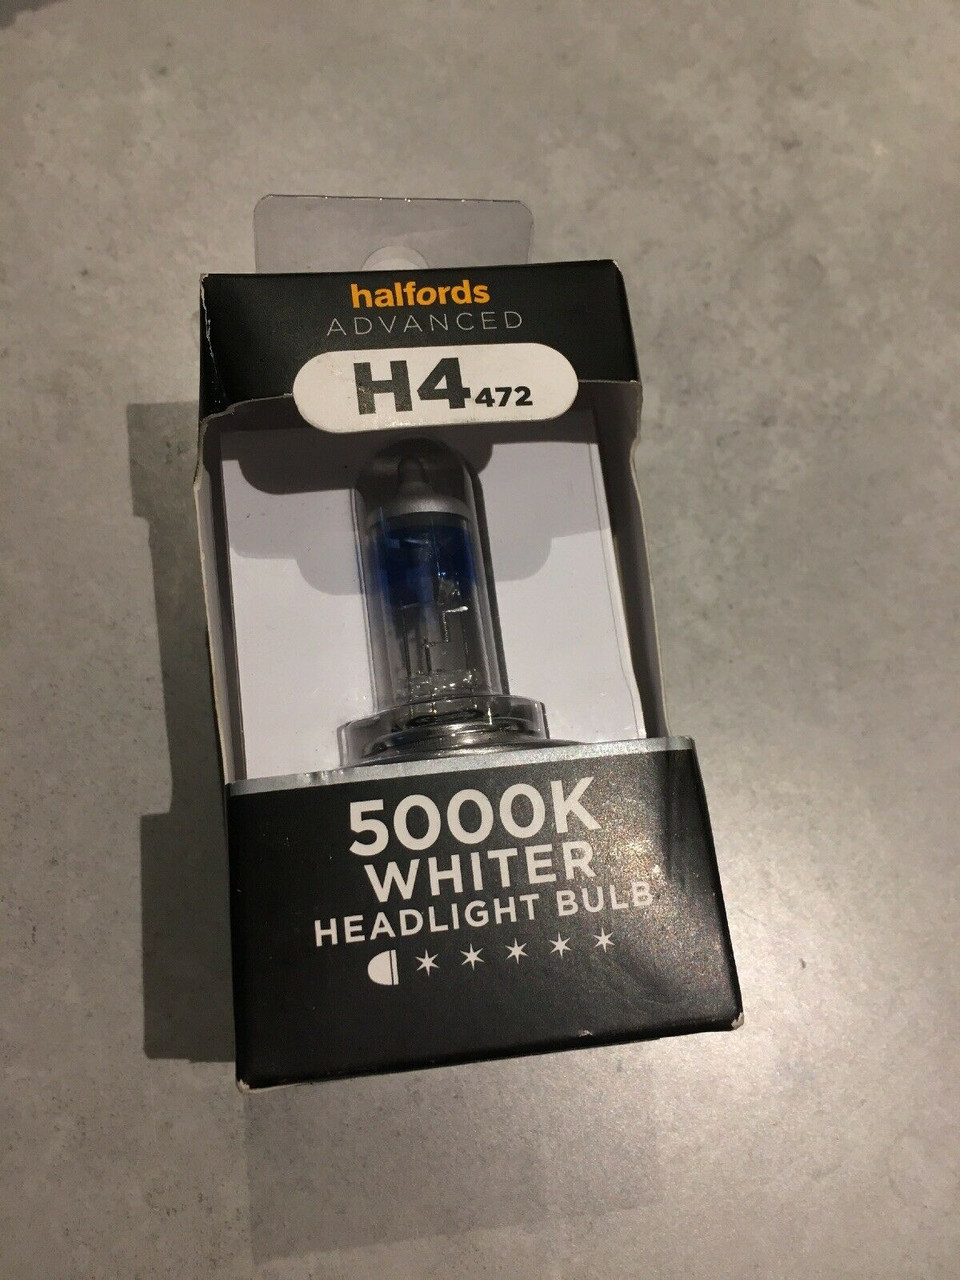 H7 477 Car Headlight Bulb Halfords Essentials Single Pack